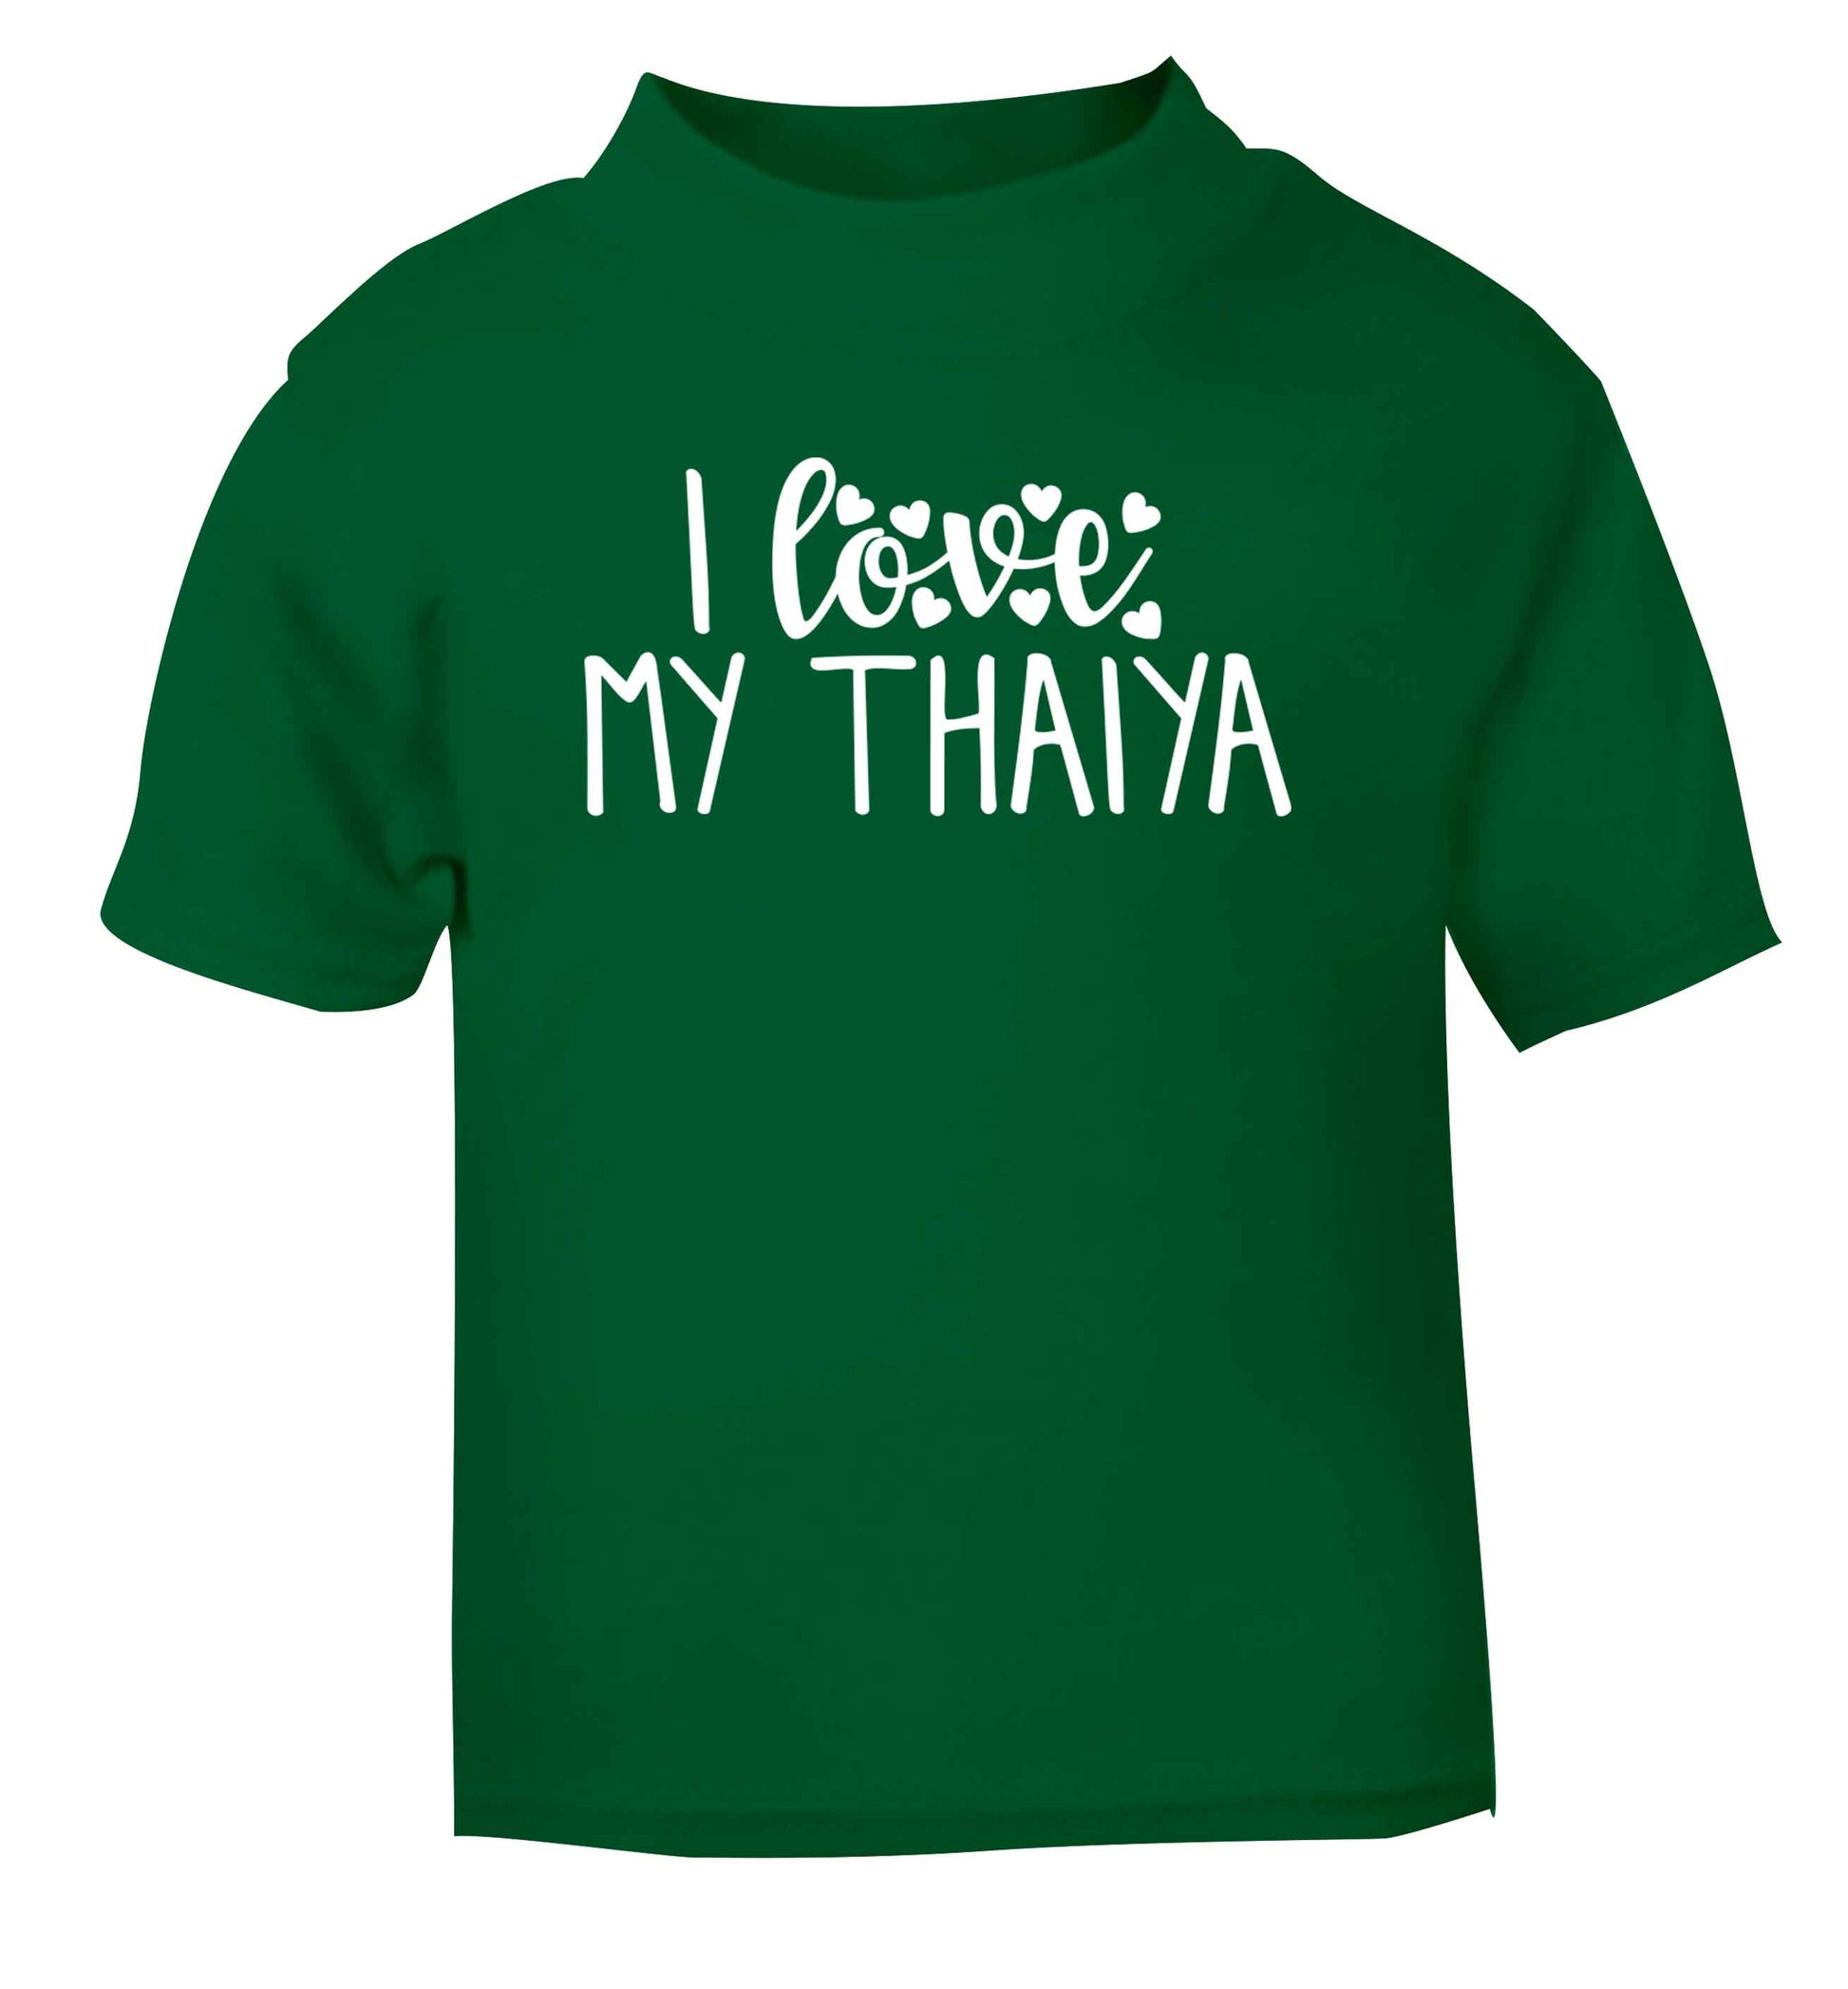 I love my thaiya green Baby Toddler Tshirt 2 Years